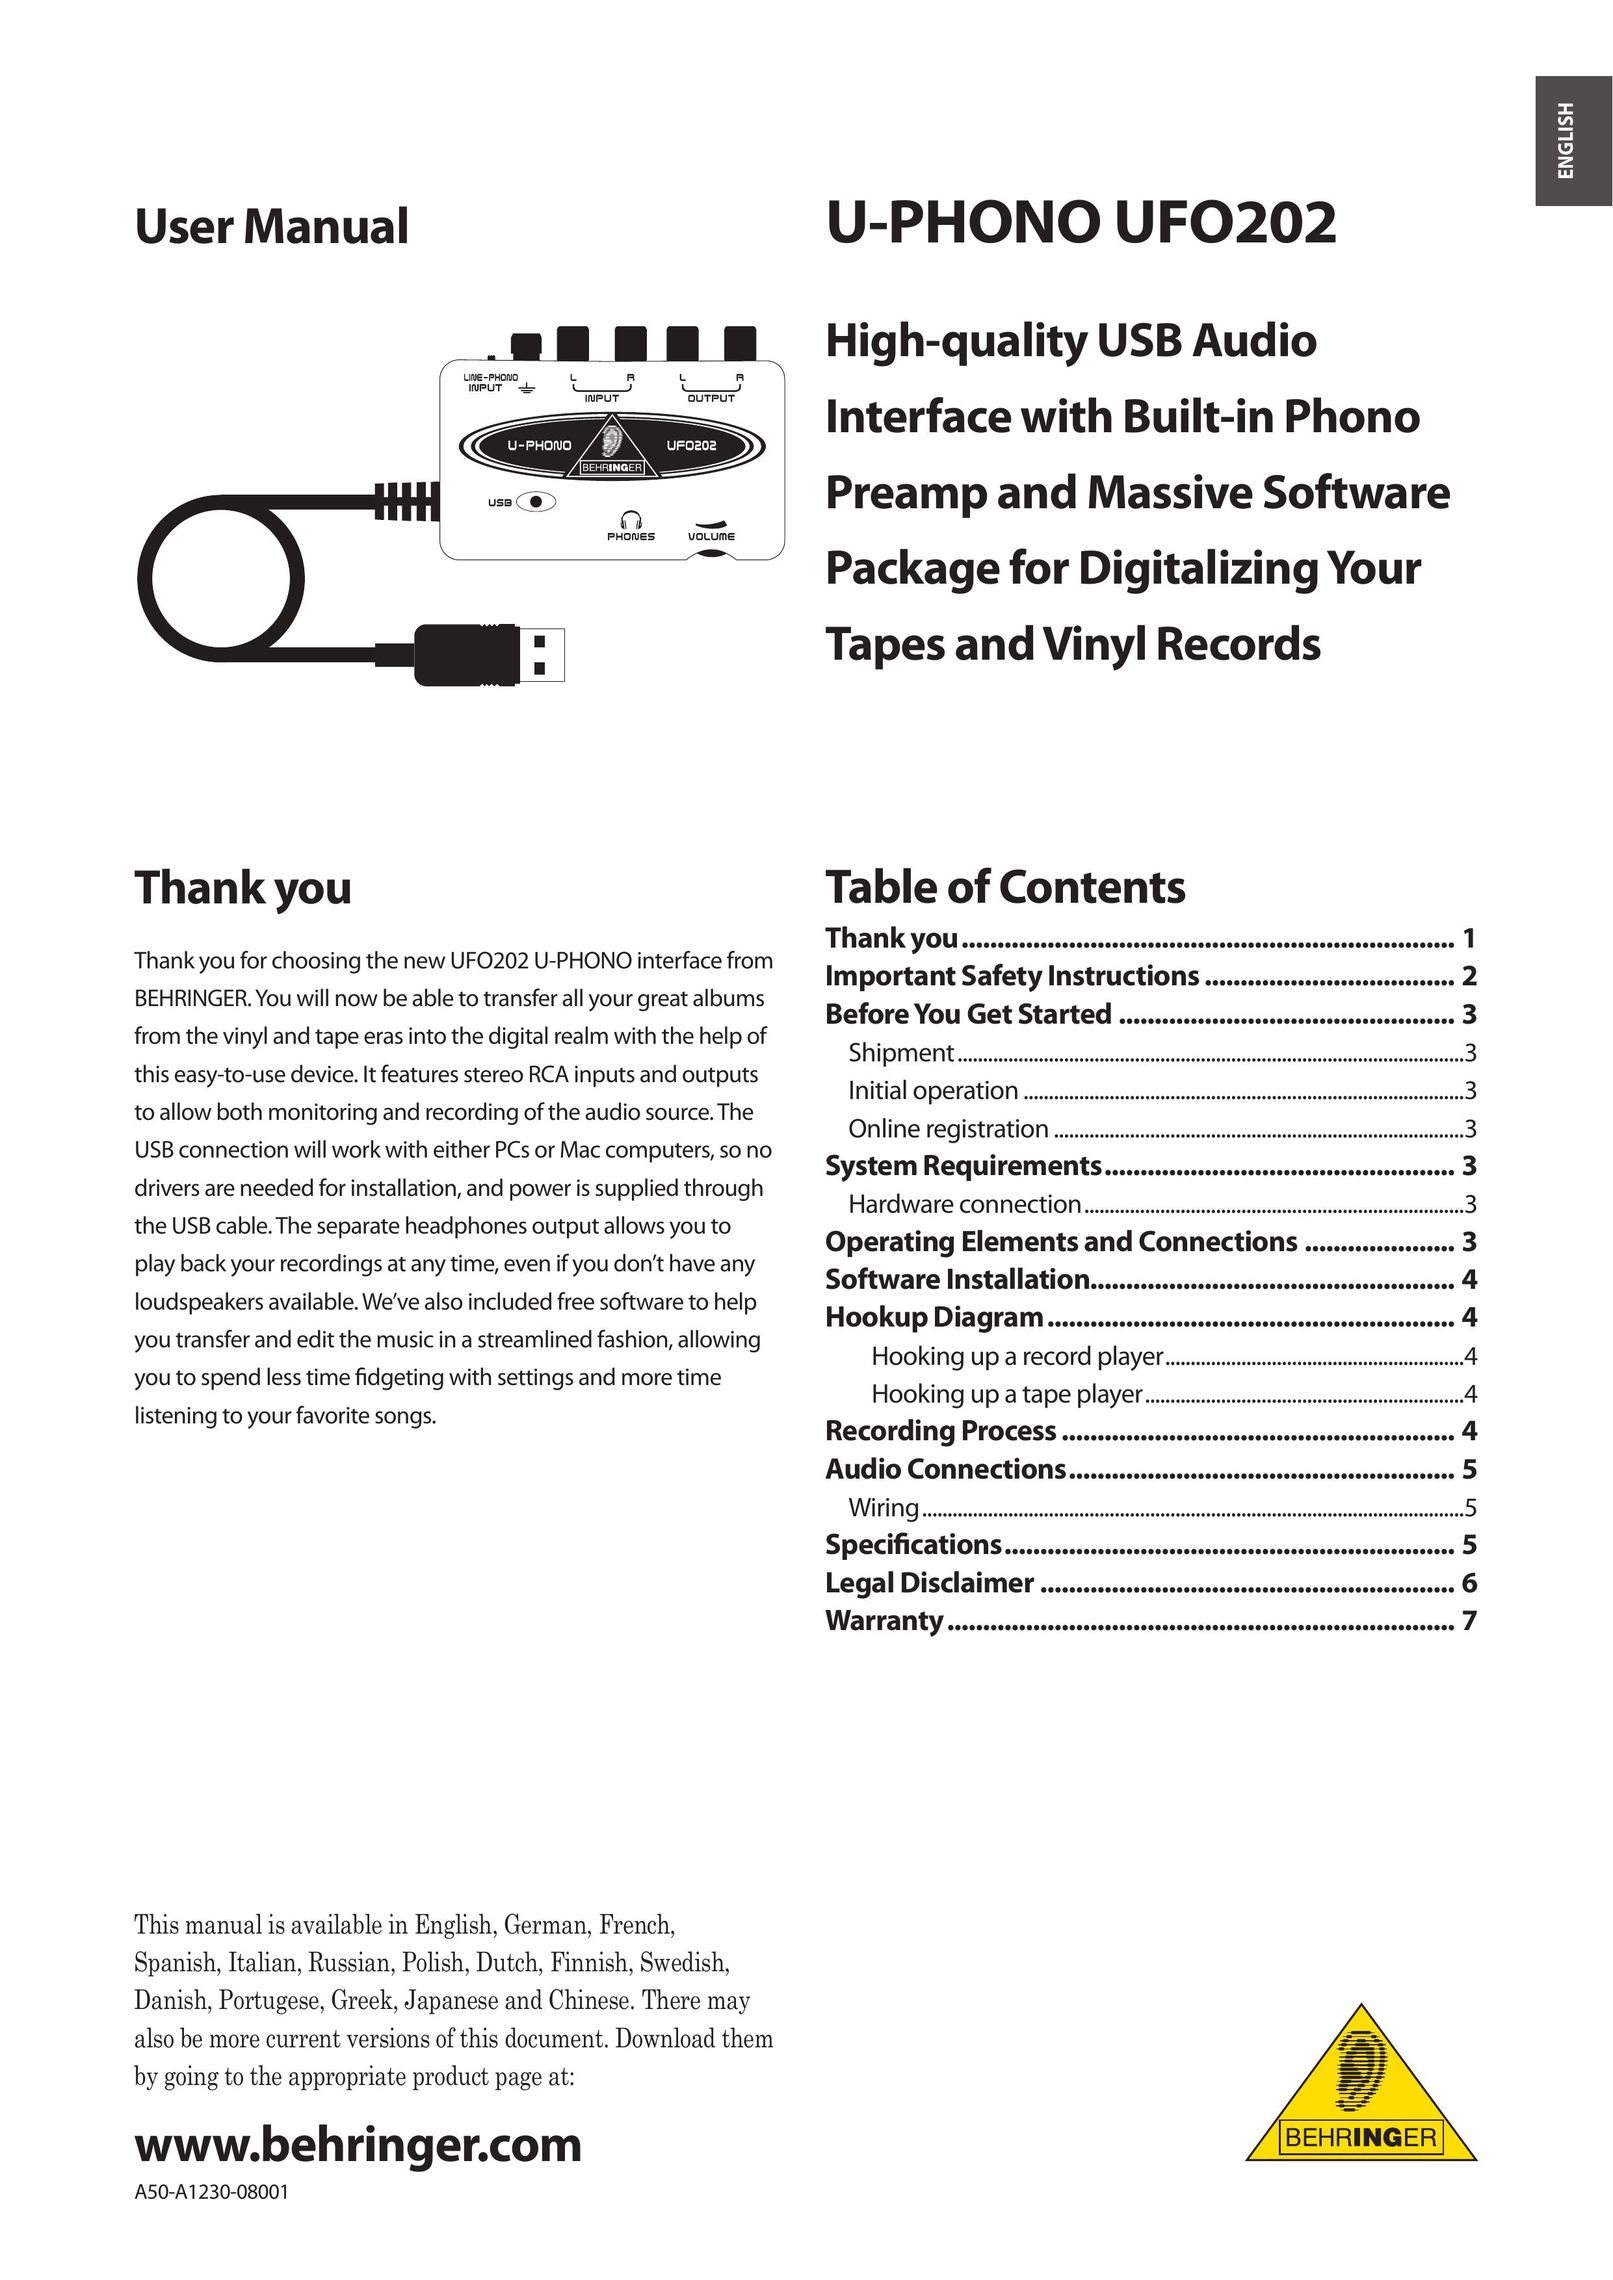 Behringer U-PHONO TV Cables User Manual